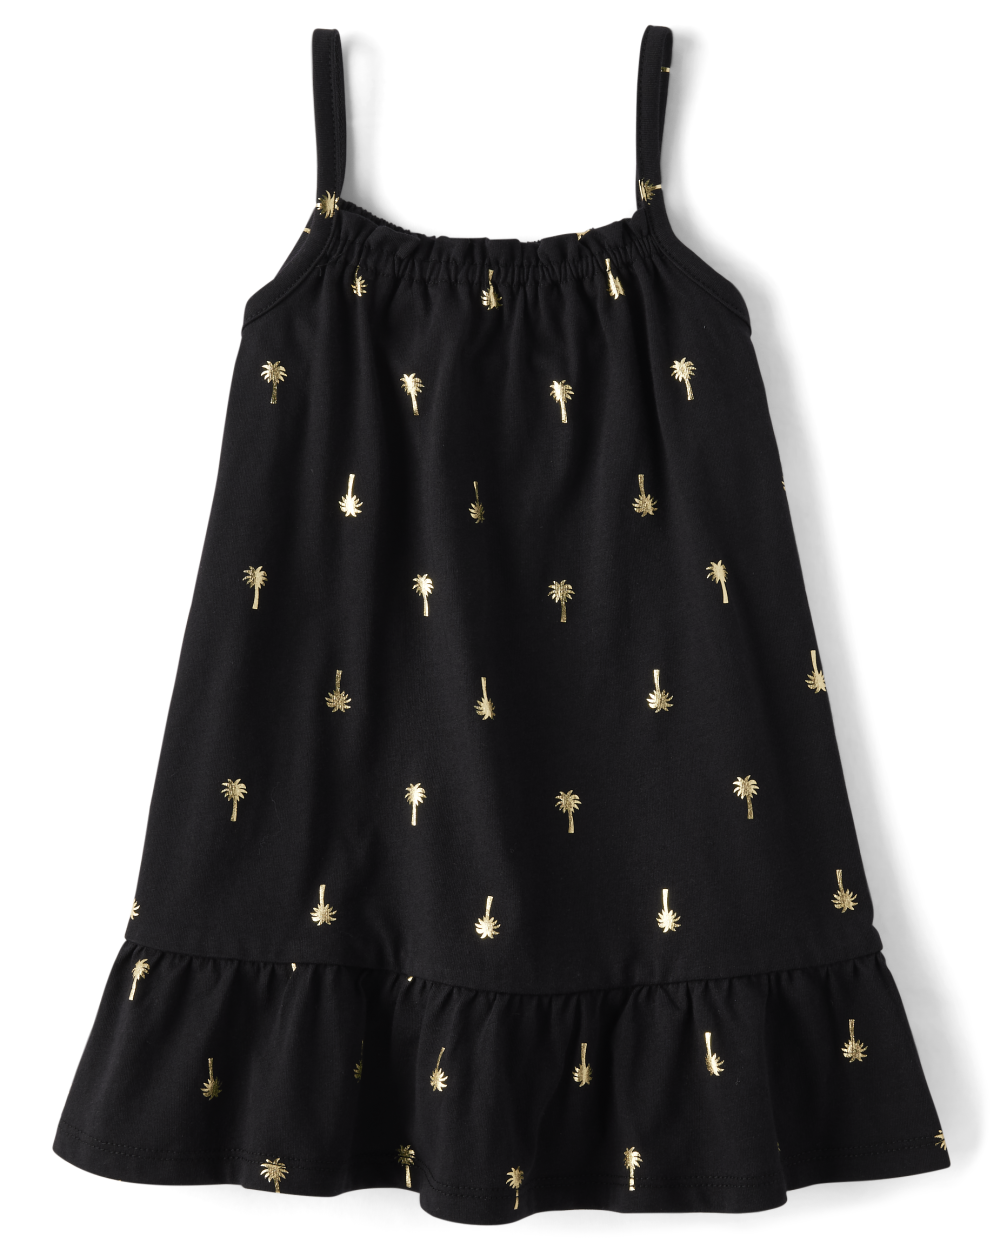 Toddler Baby Ruffle Trim Sleeveless Above the Knee Crew Neck Swing-Skirt General Print Dress